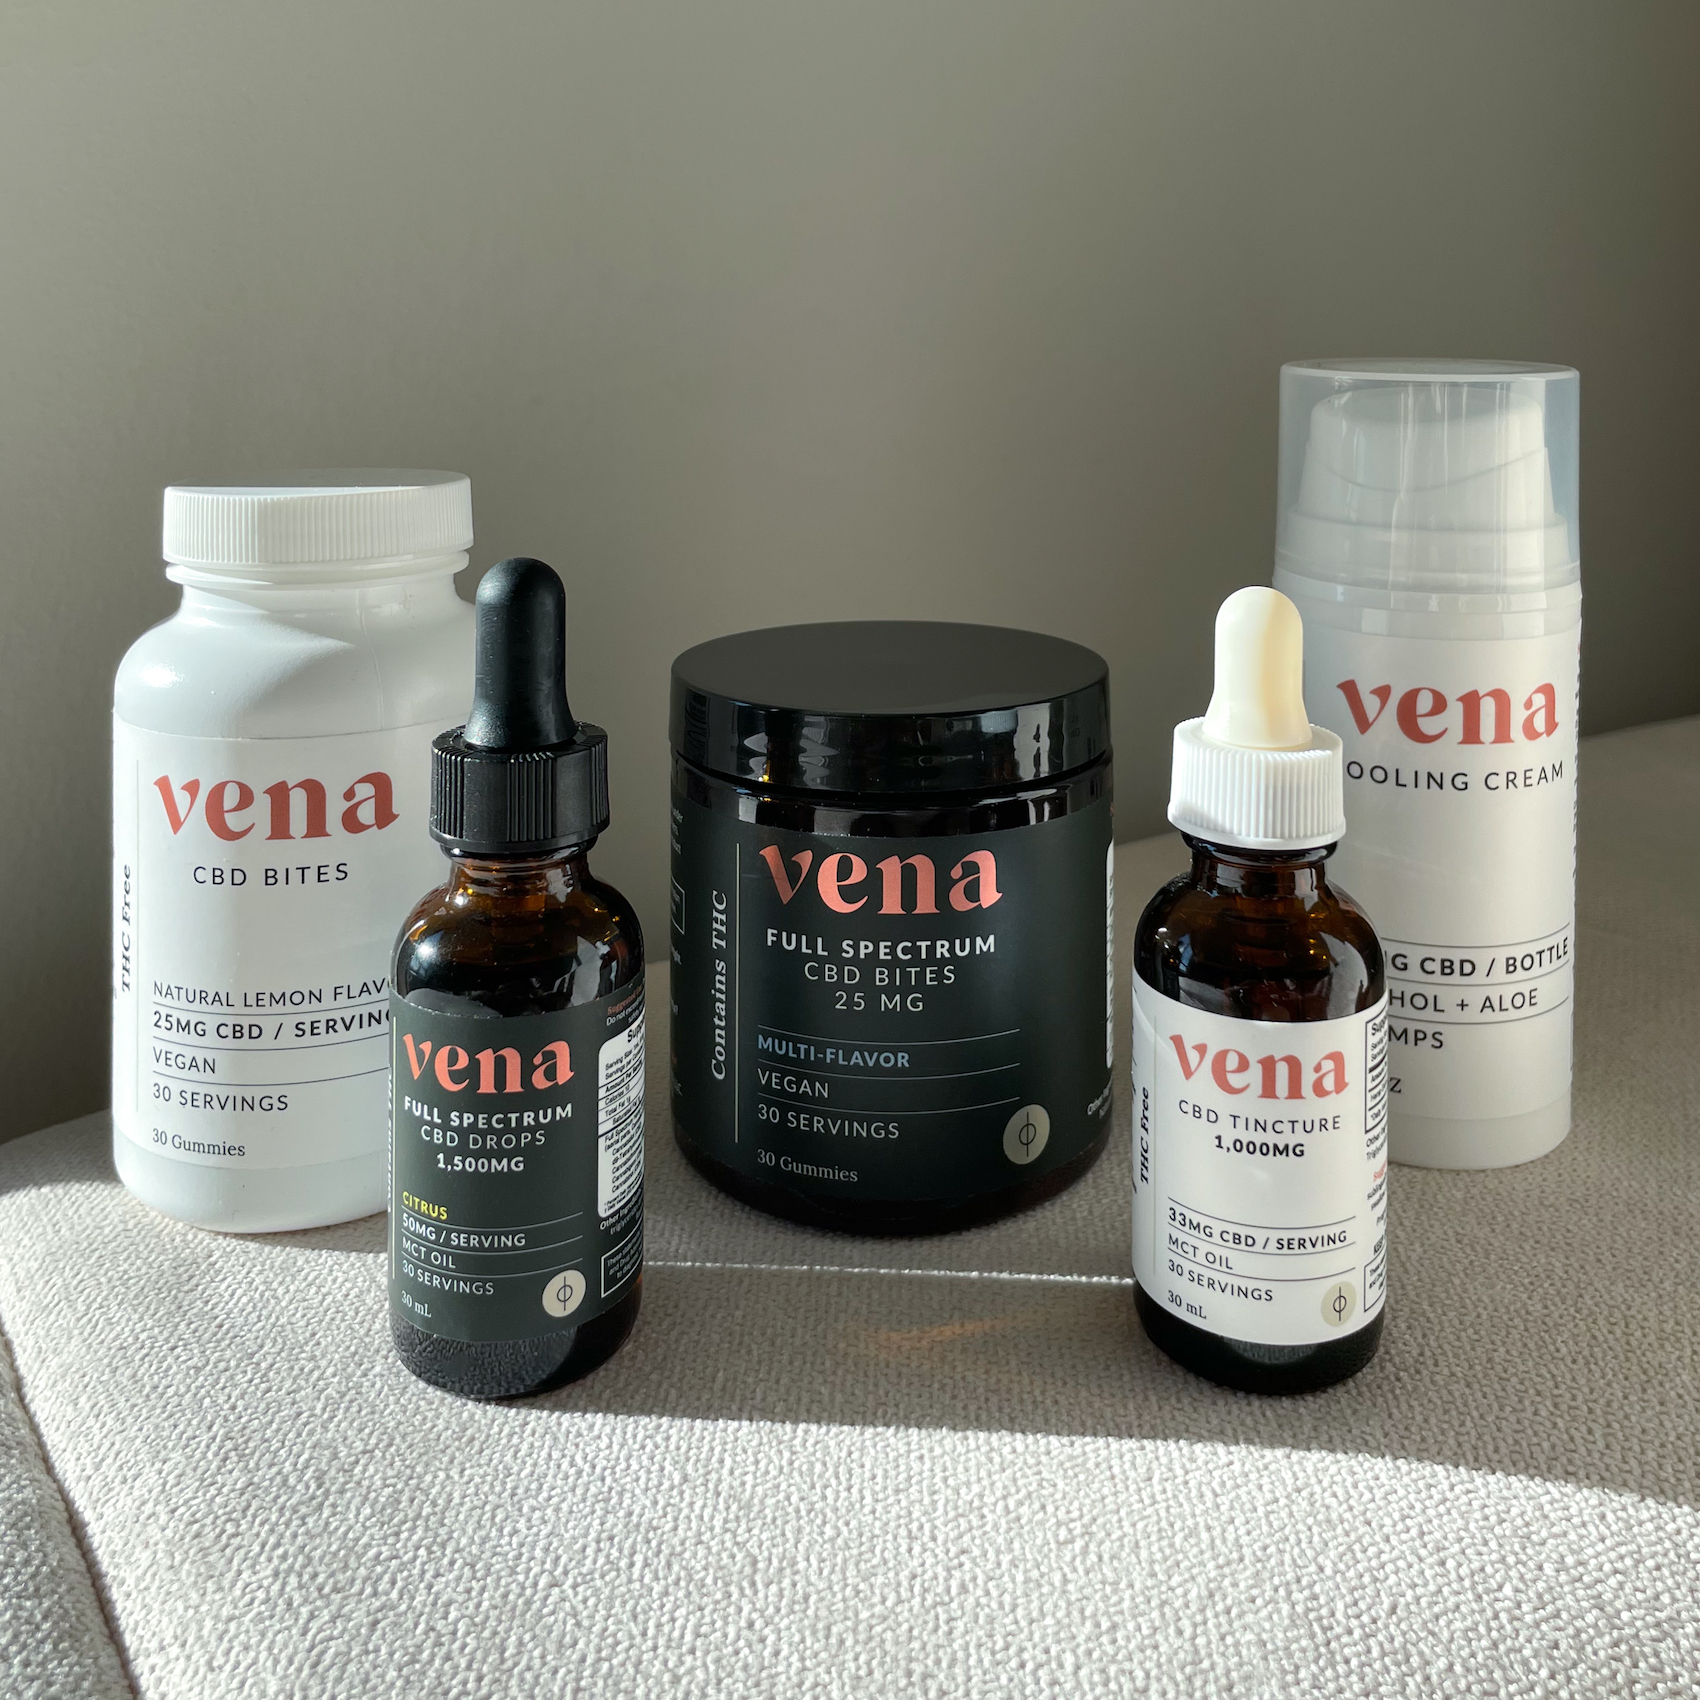 Vena CBD products review